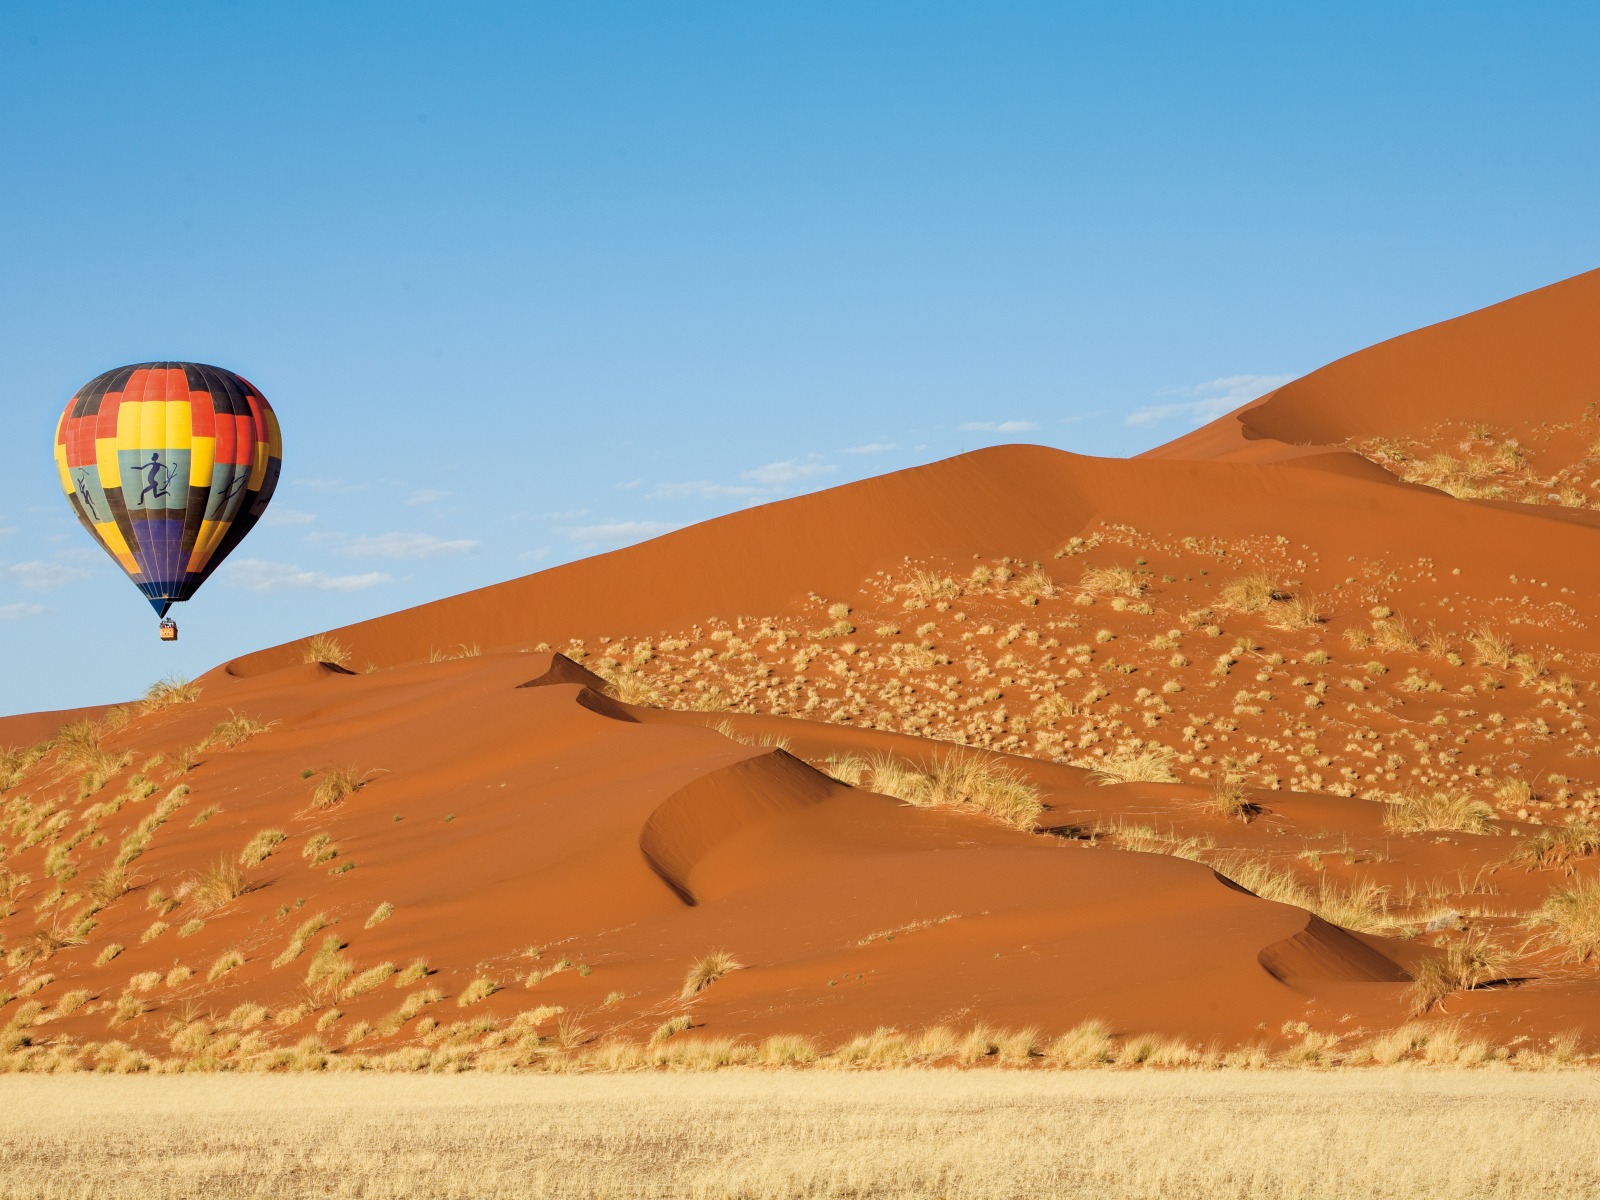 A balloon over the dunes - Desert Homestead Outpost